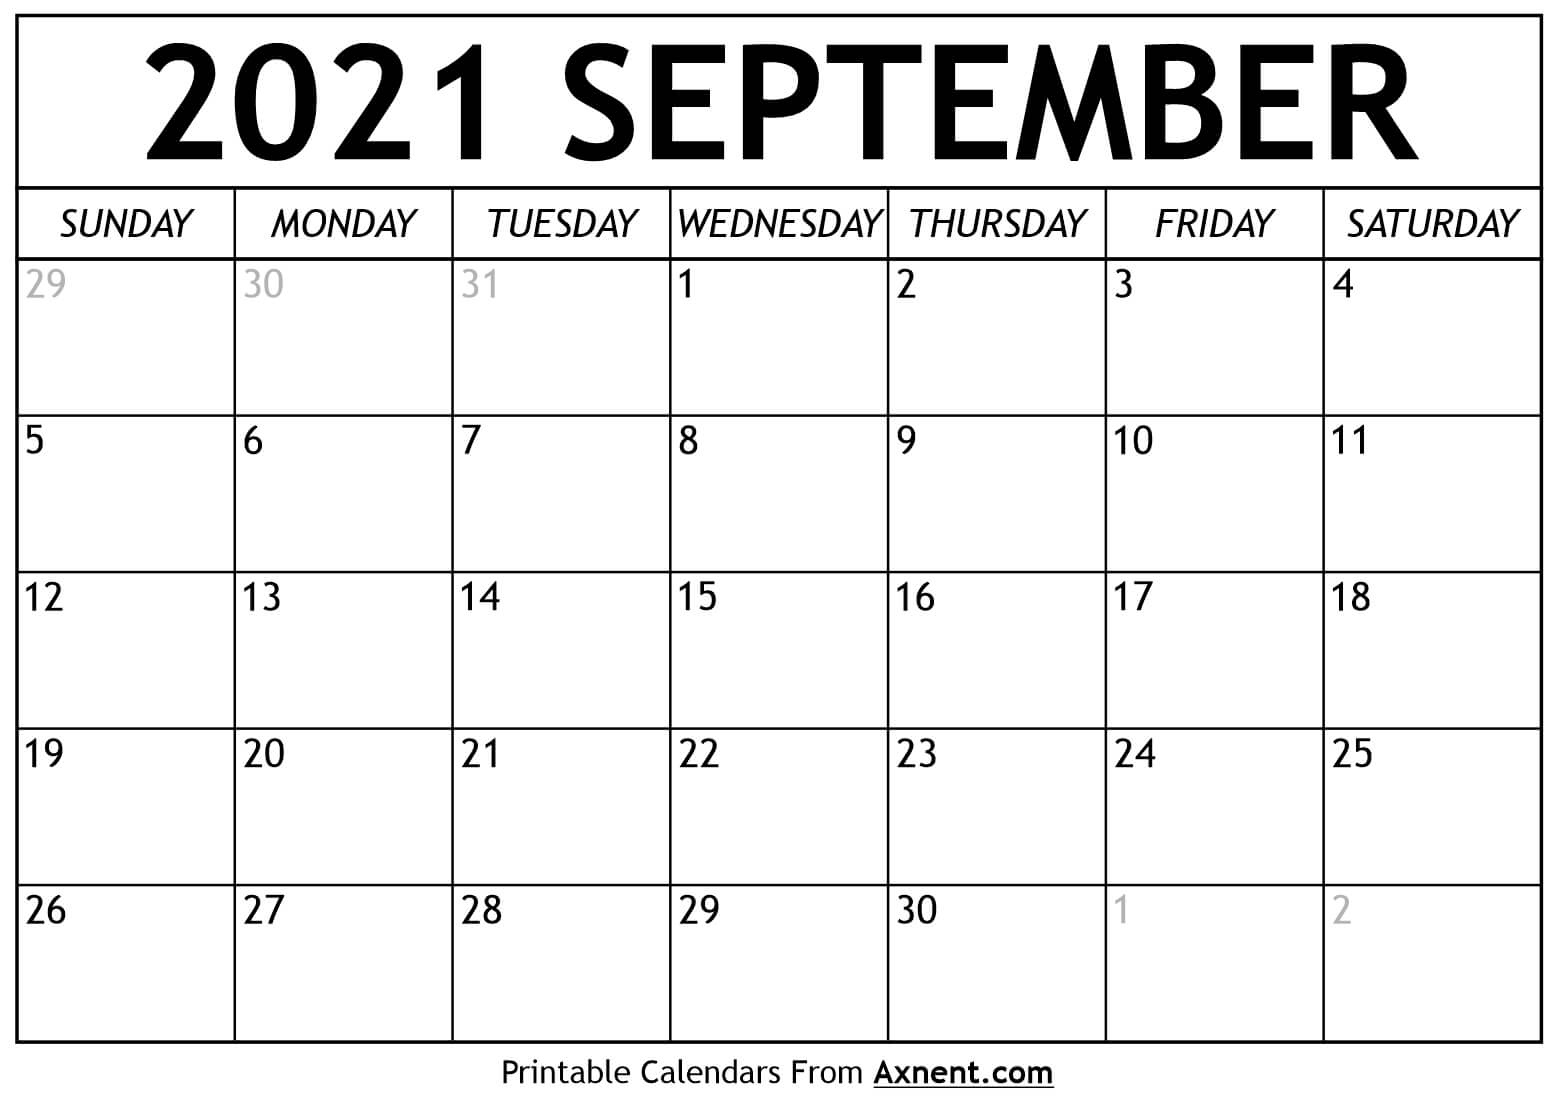 Printable September 2021 Calendar Template - Time Management Tools Printable September 2021 September 2021 Hindu Calendar